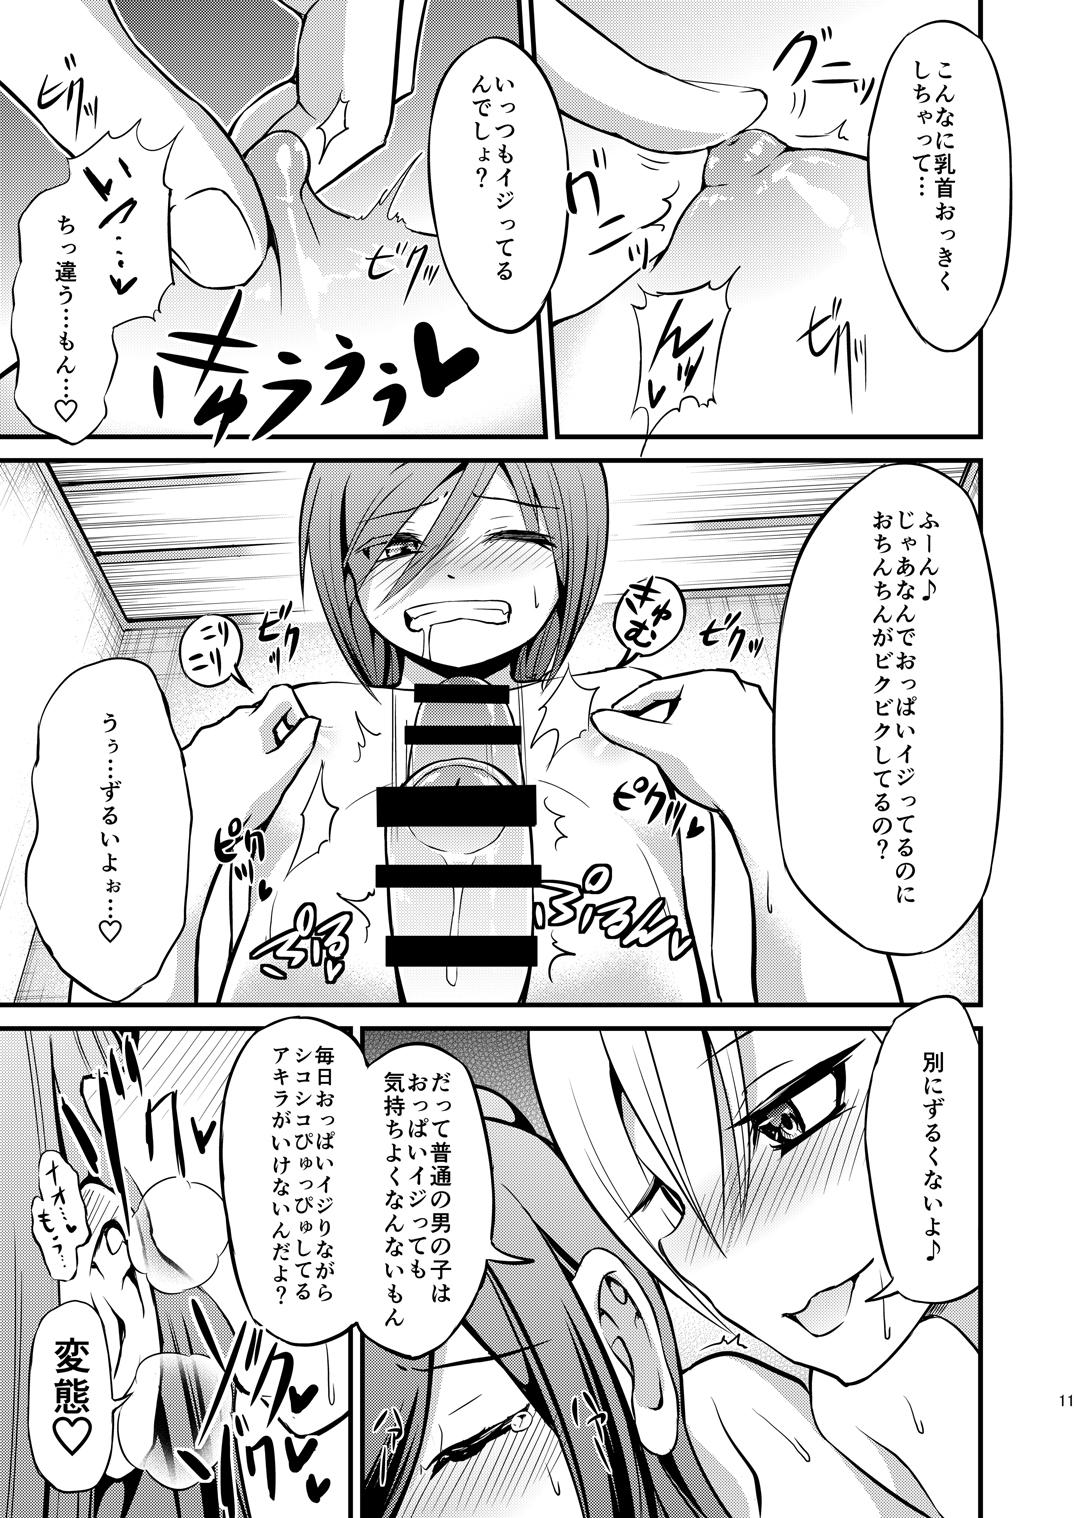 Tinder Asejimi Girl On Girl - Page 10